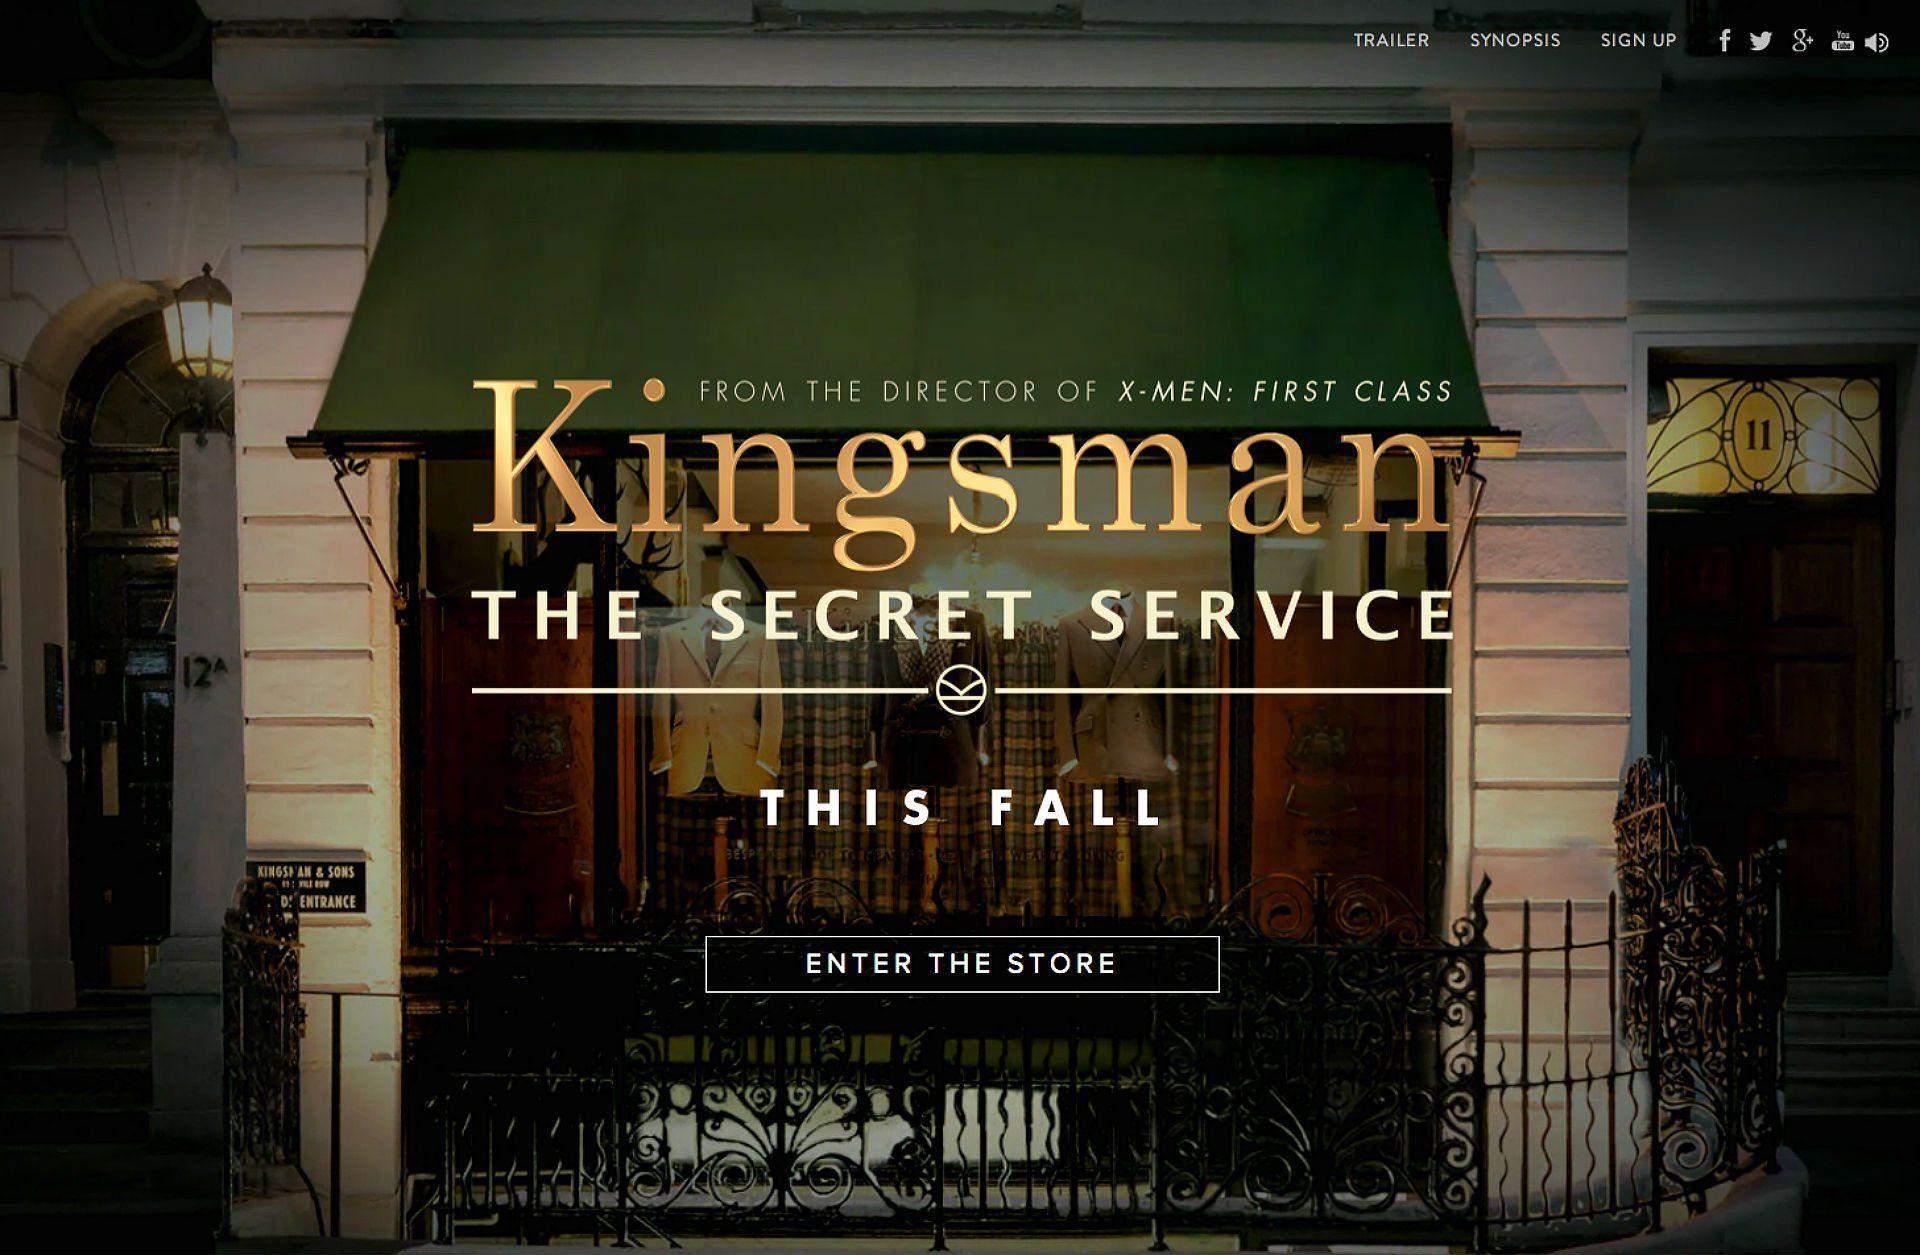 watch kingsman 2 online for free